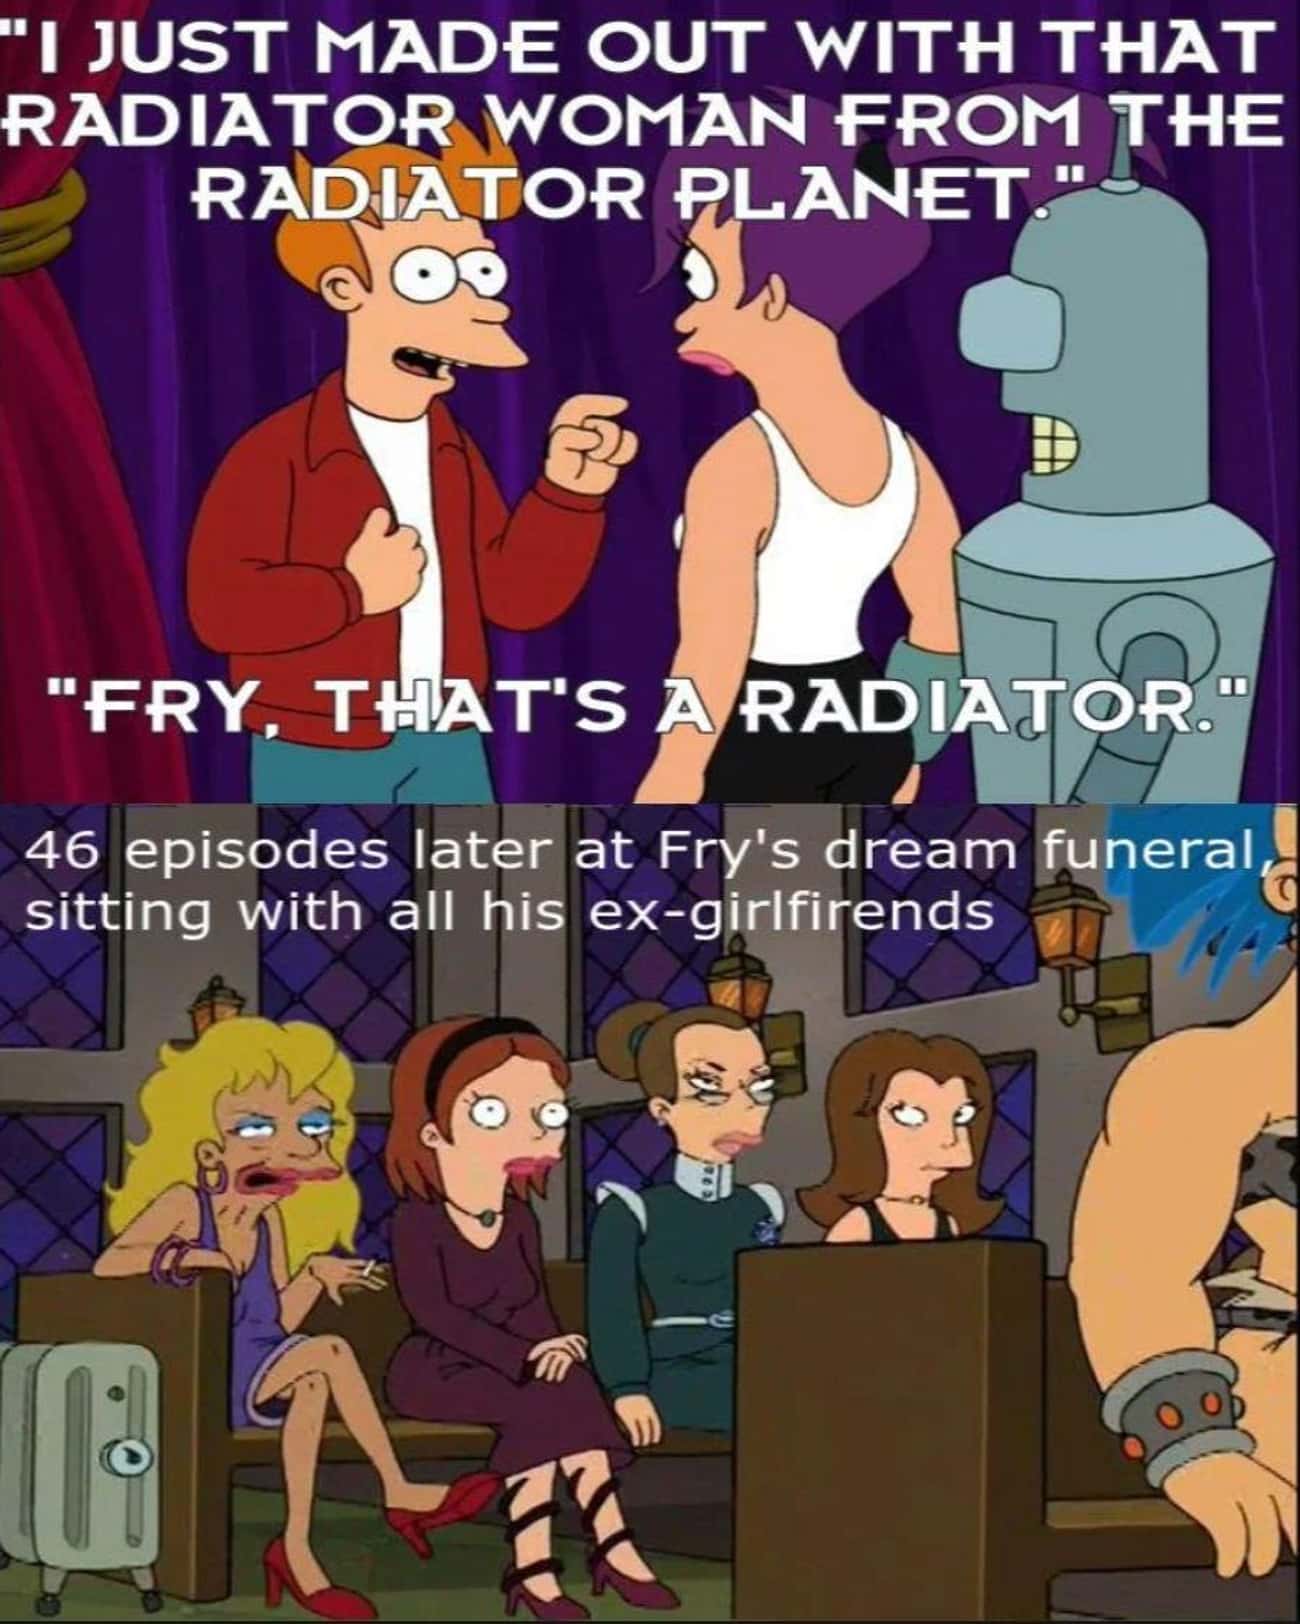 She Definitely Was A Radiator In 'Futurama'